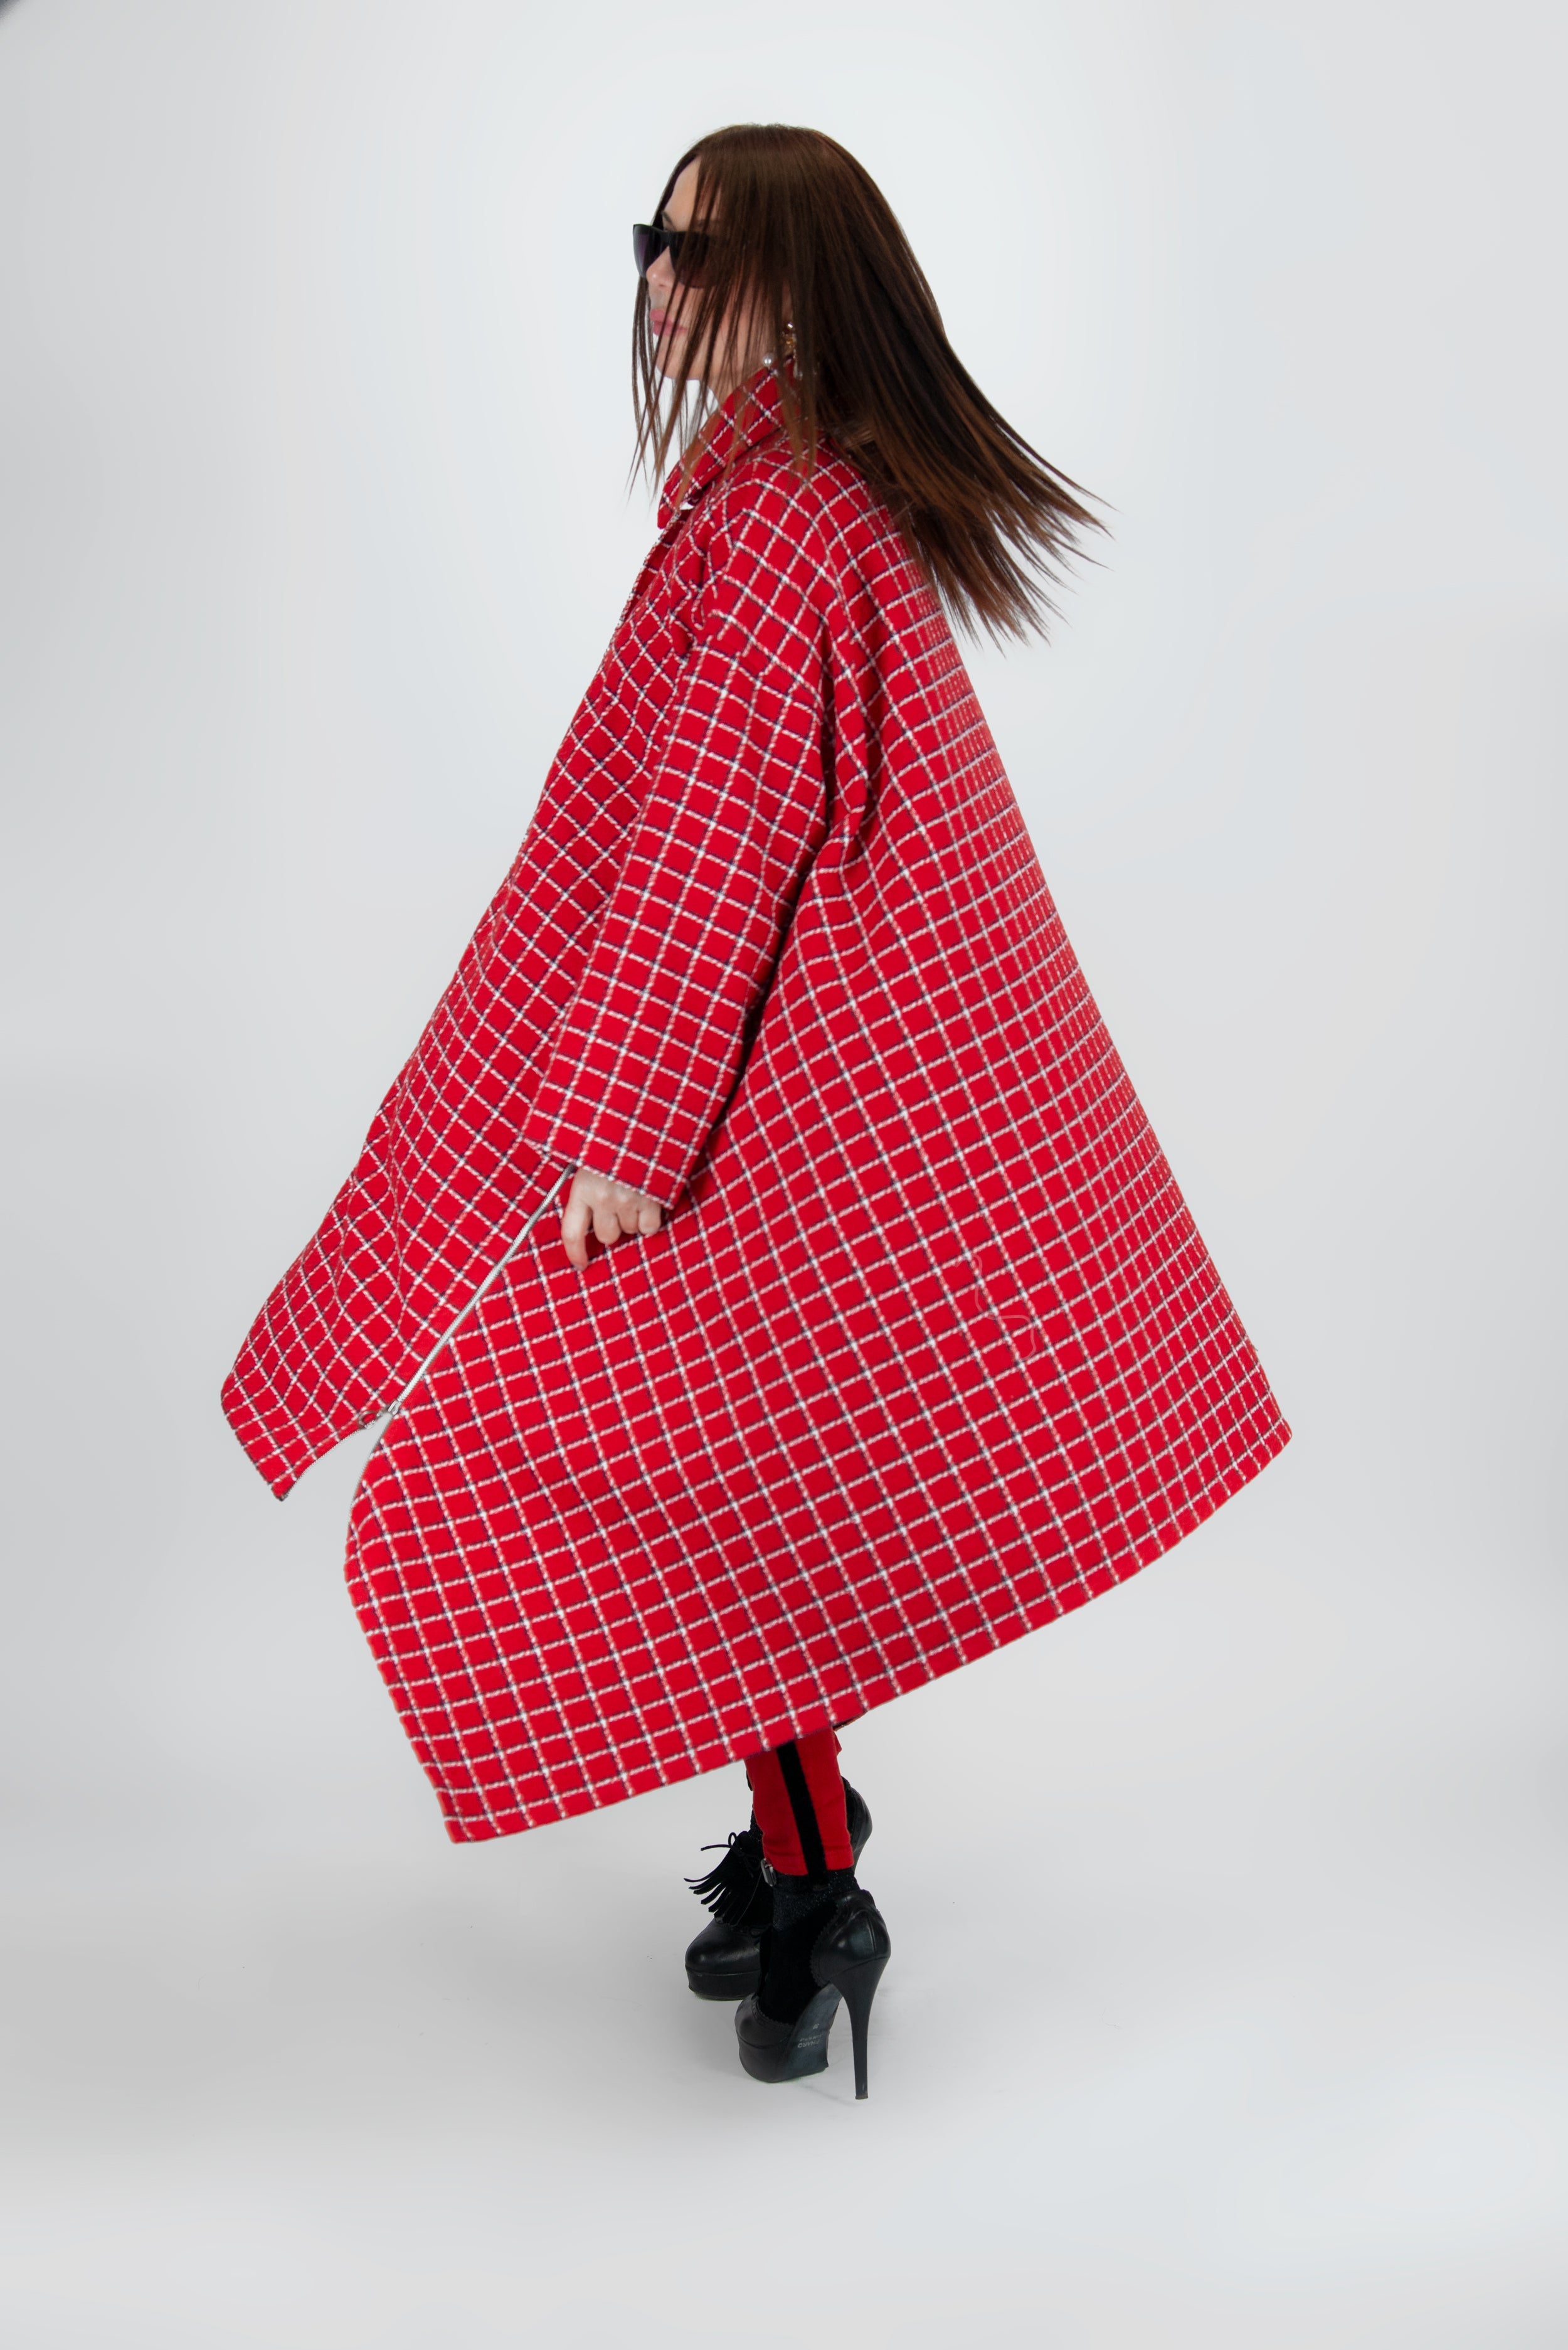 Red Plaid wool Women Coat, Asymmetrical Coat by EUG Fashion